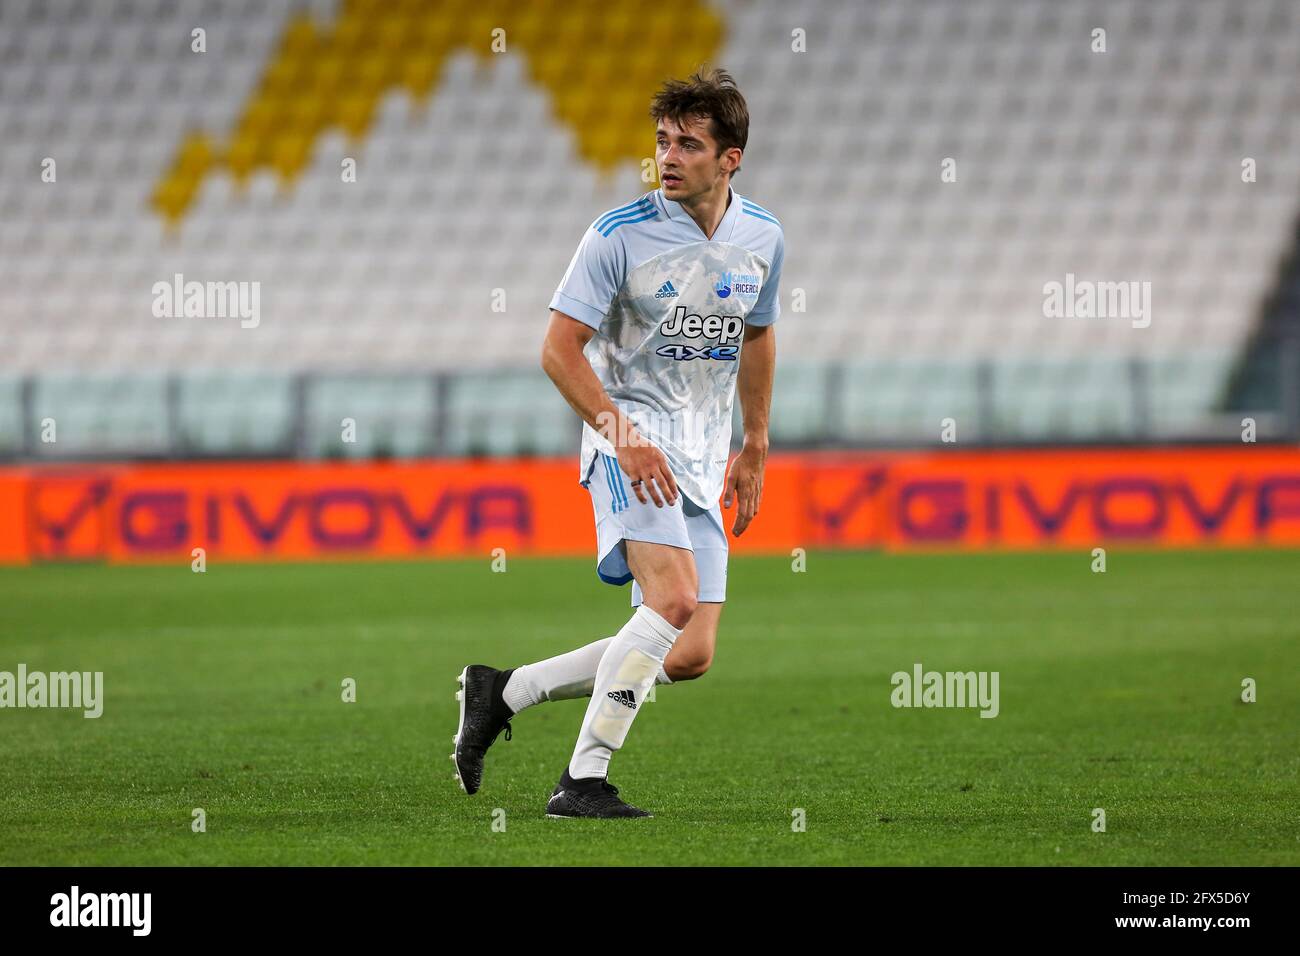 Nazionale calcio italia hi-res stock photography and images - Alamy